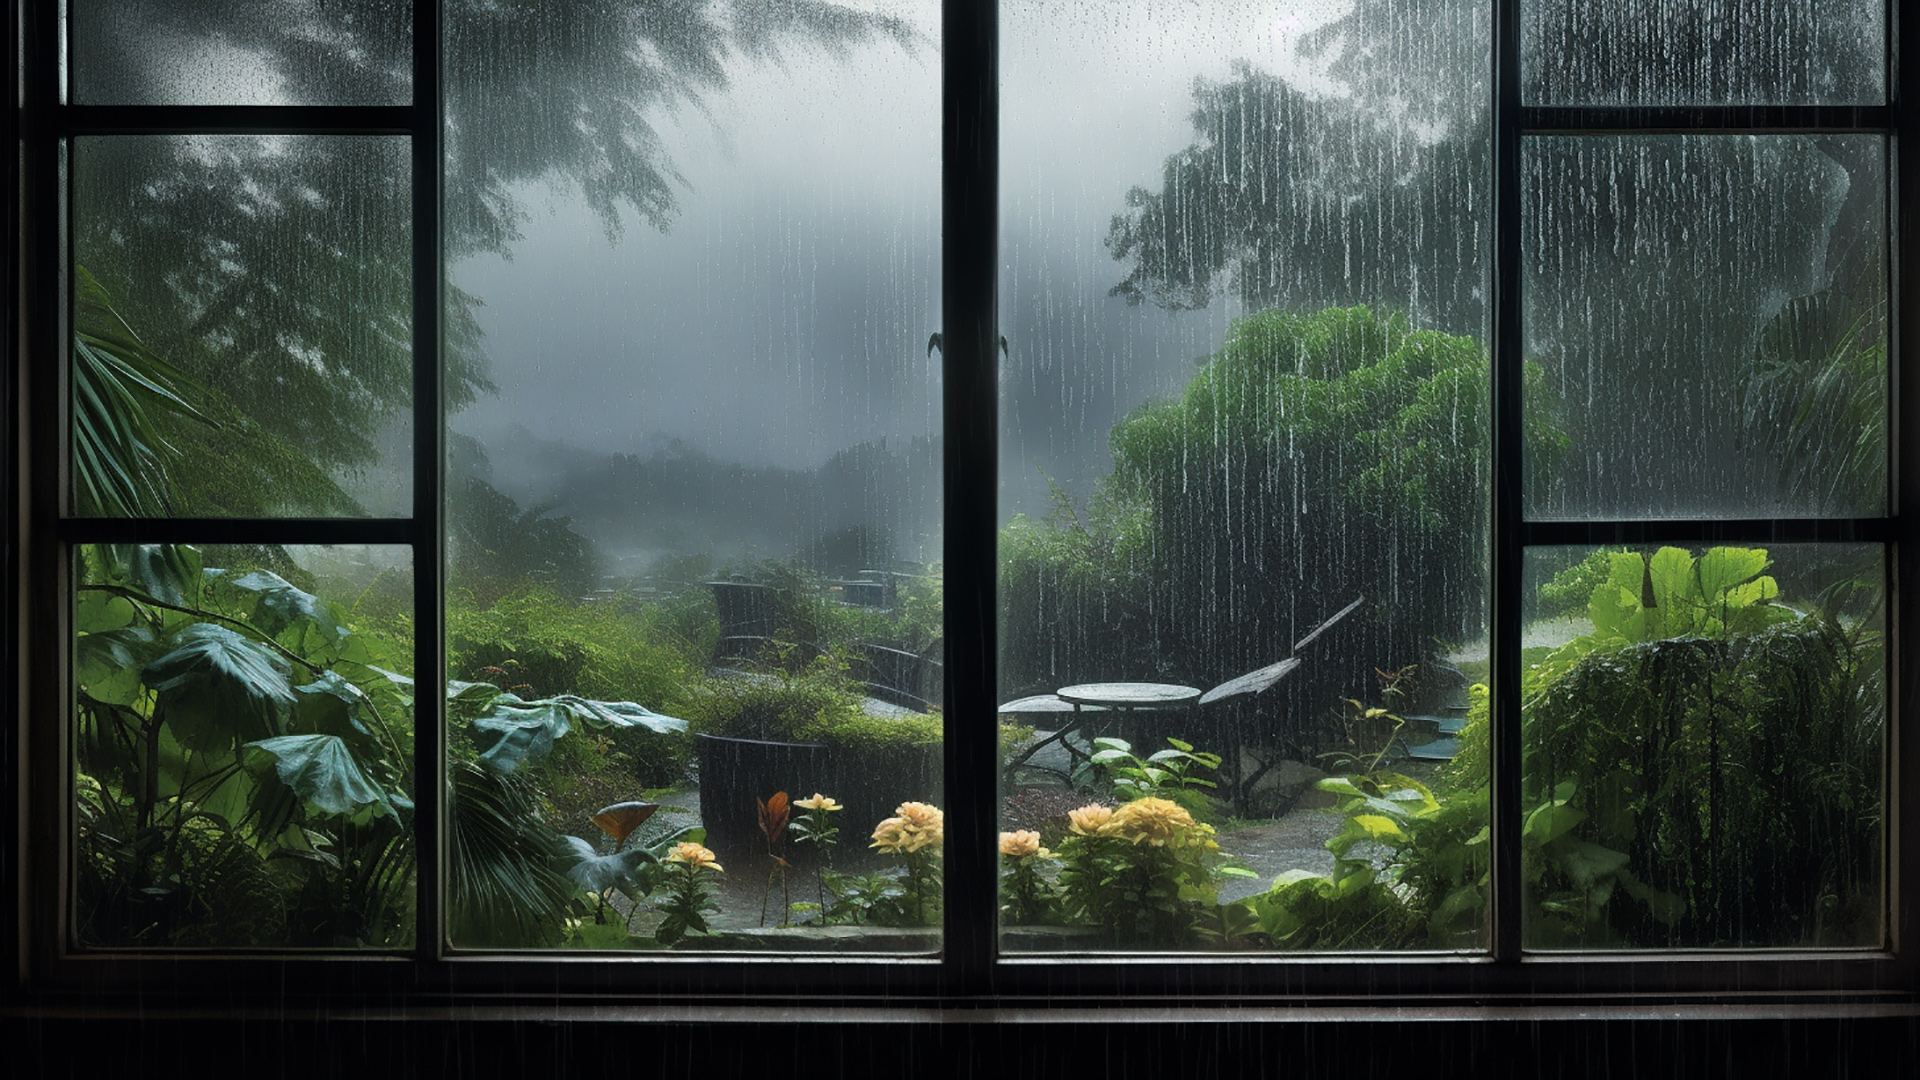 Through the Glass - 8K Rainy Day Desktop Wallpaper